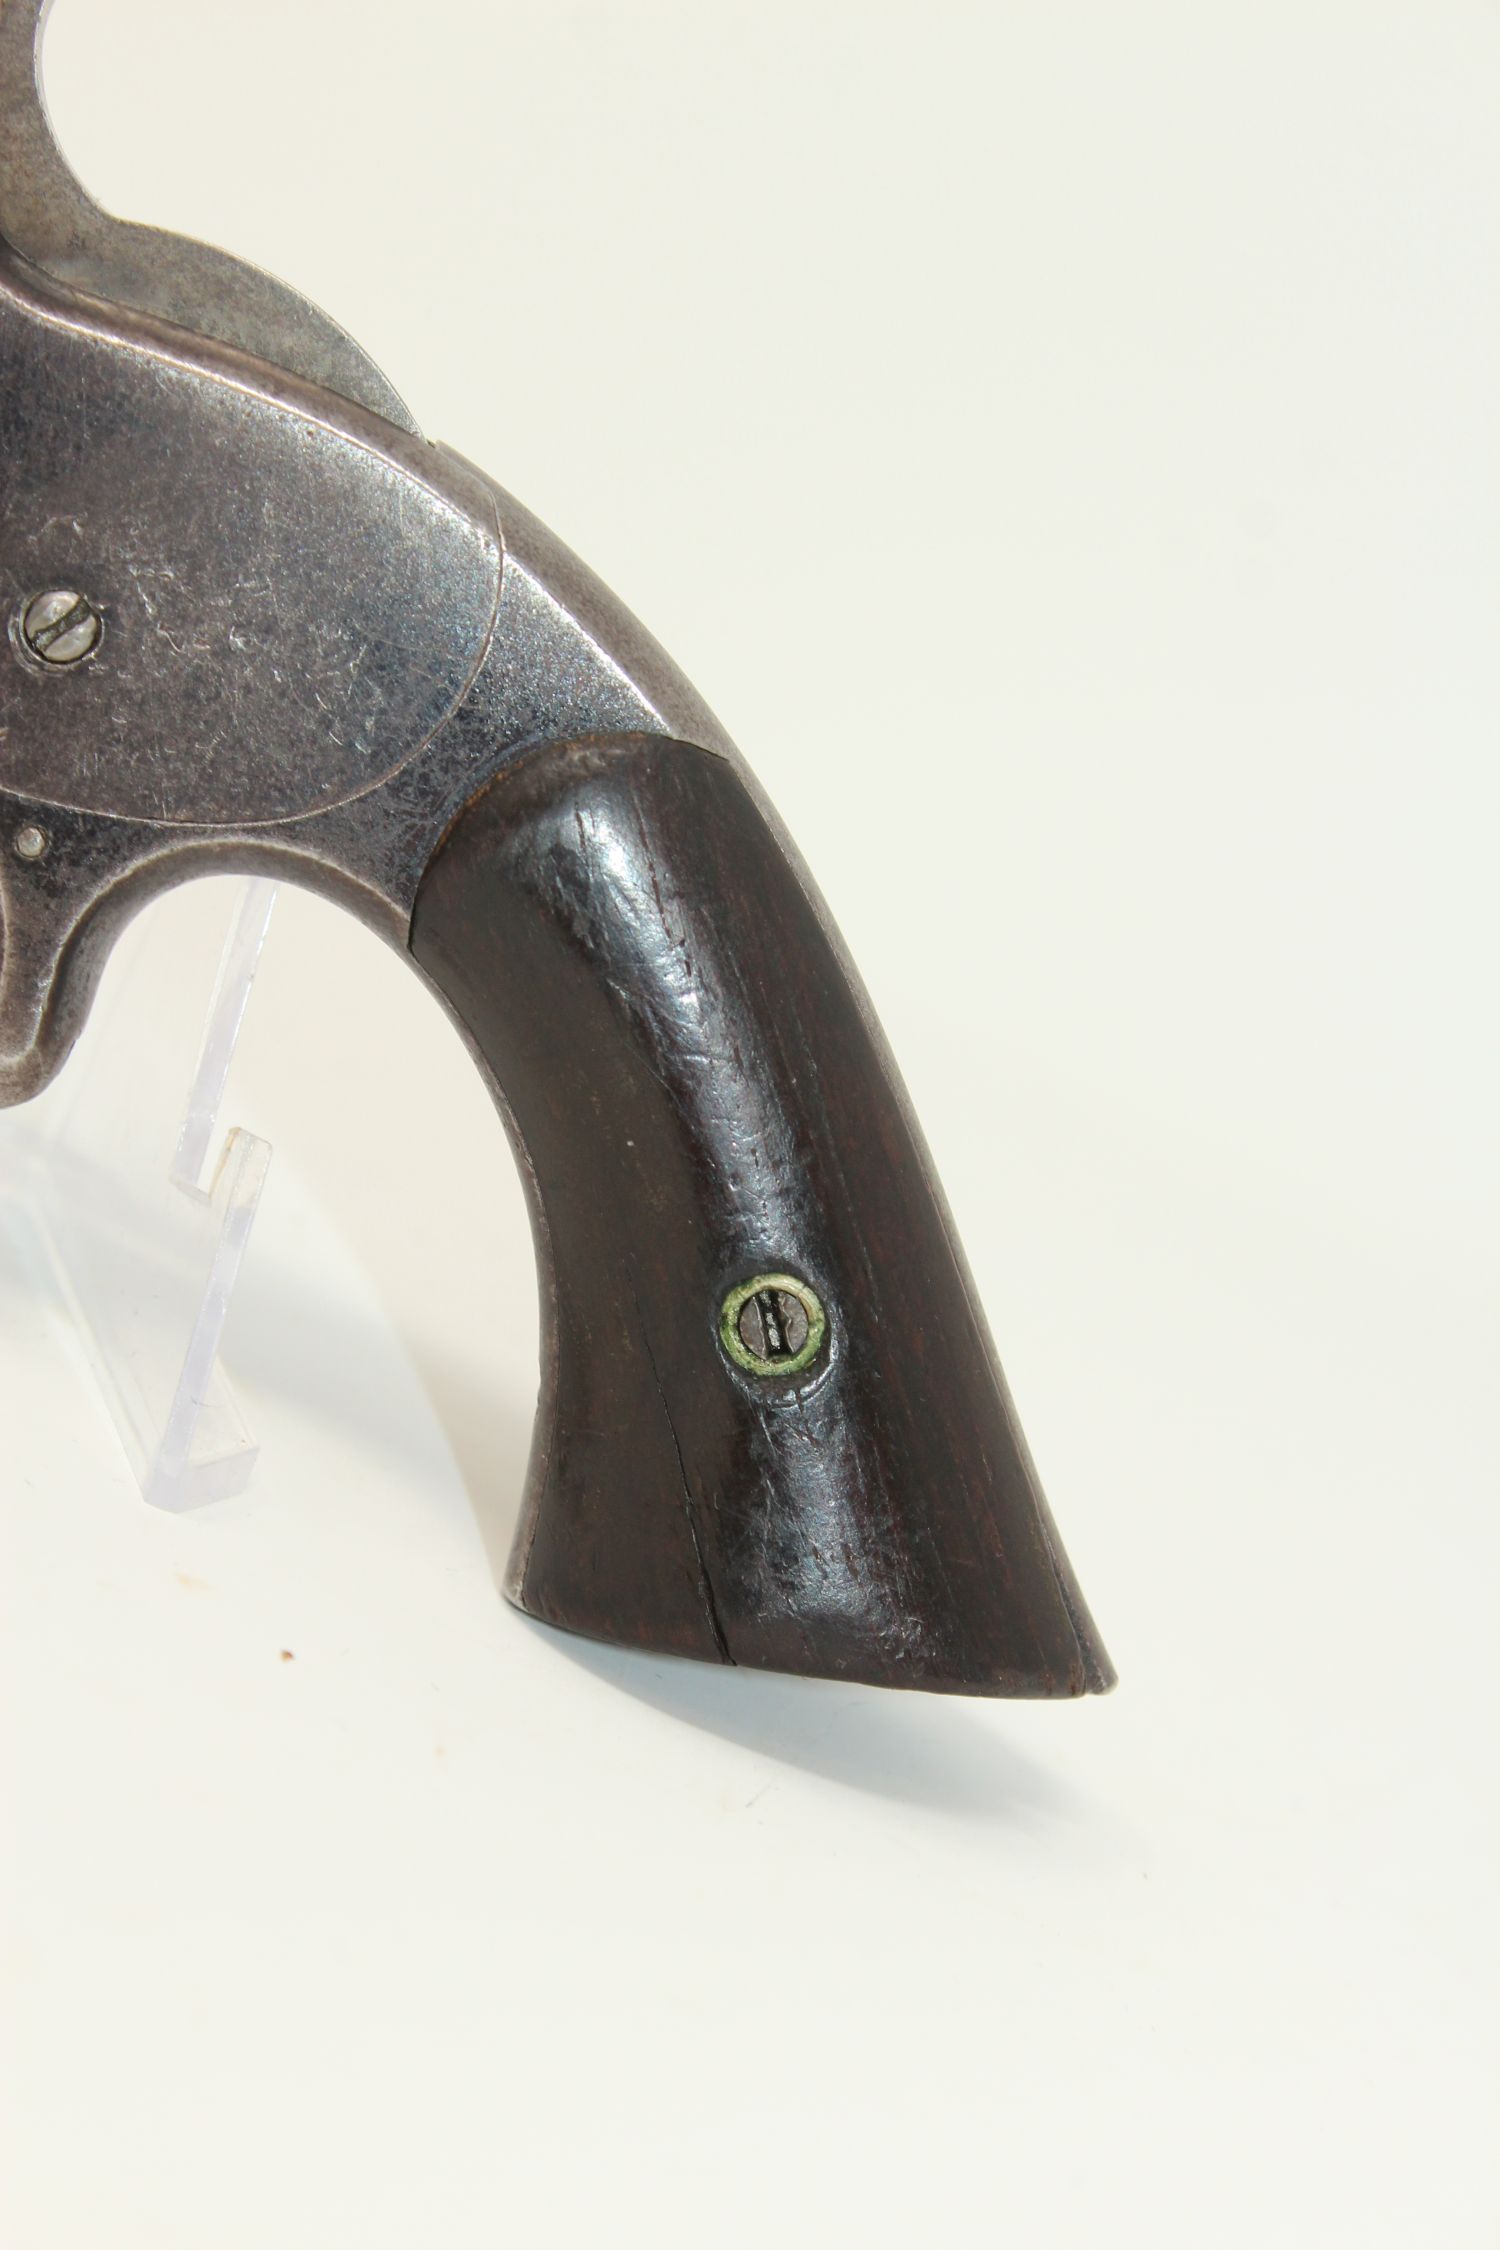 S&W Model 1 1-2 First Issue Revolver C&R Antique002 | Ancestry Guns